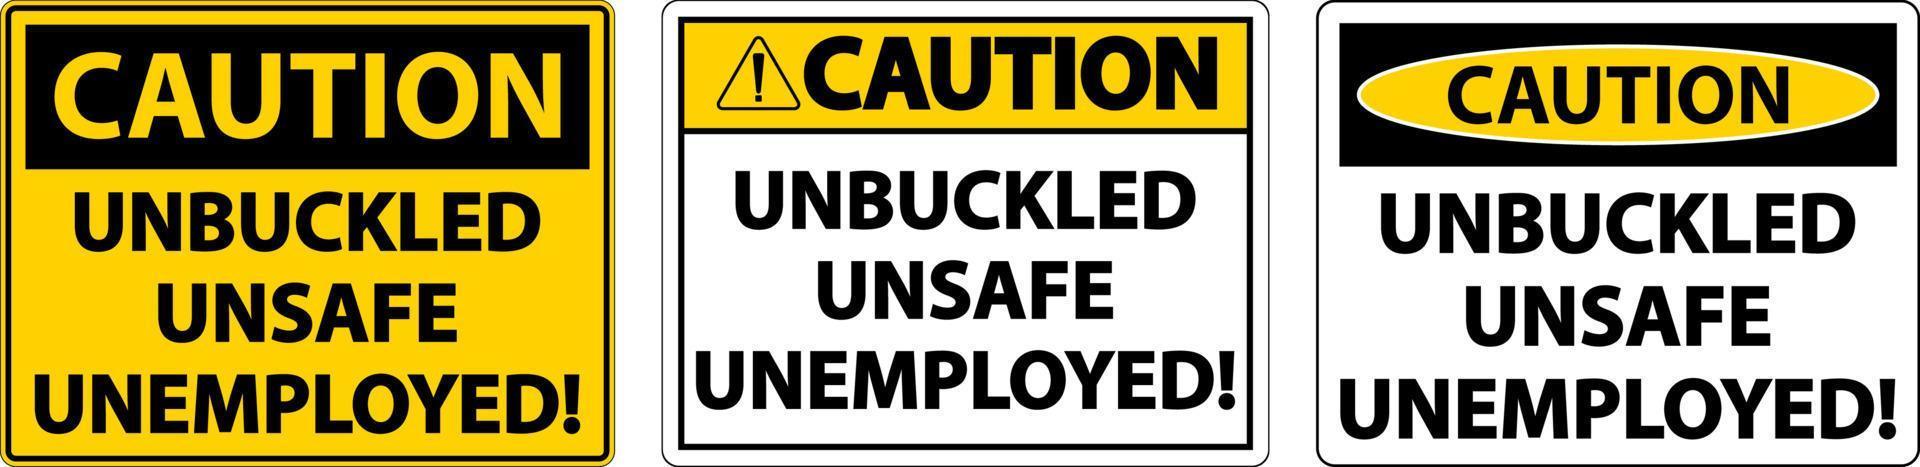 Caution Unbuckled Unsafe Unemployed Sign On White Background vector